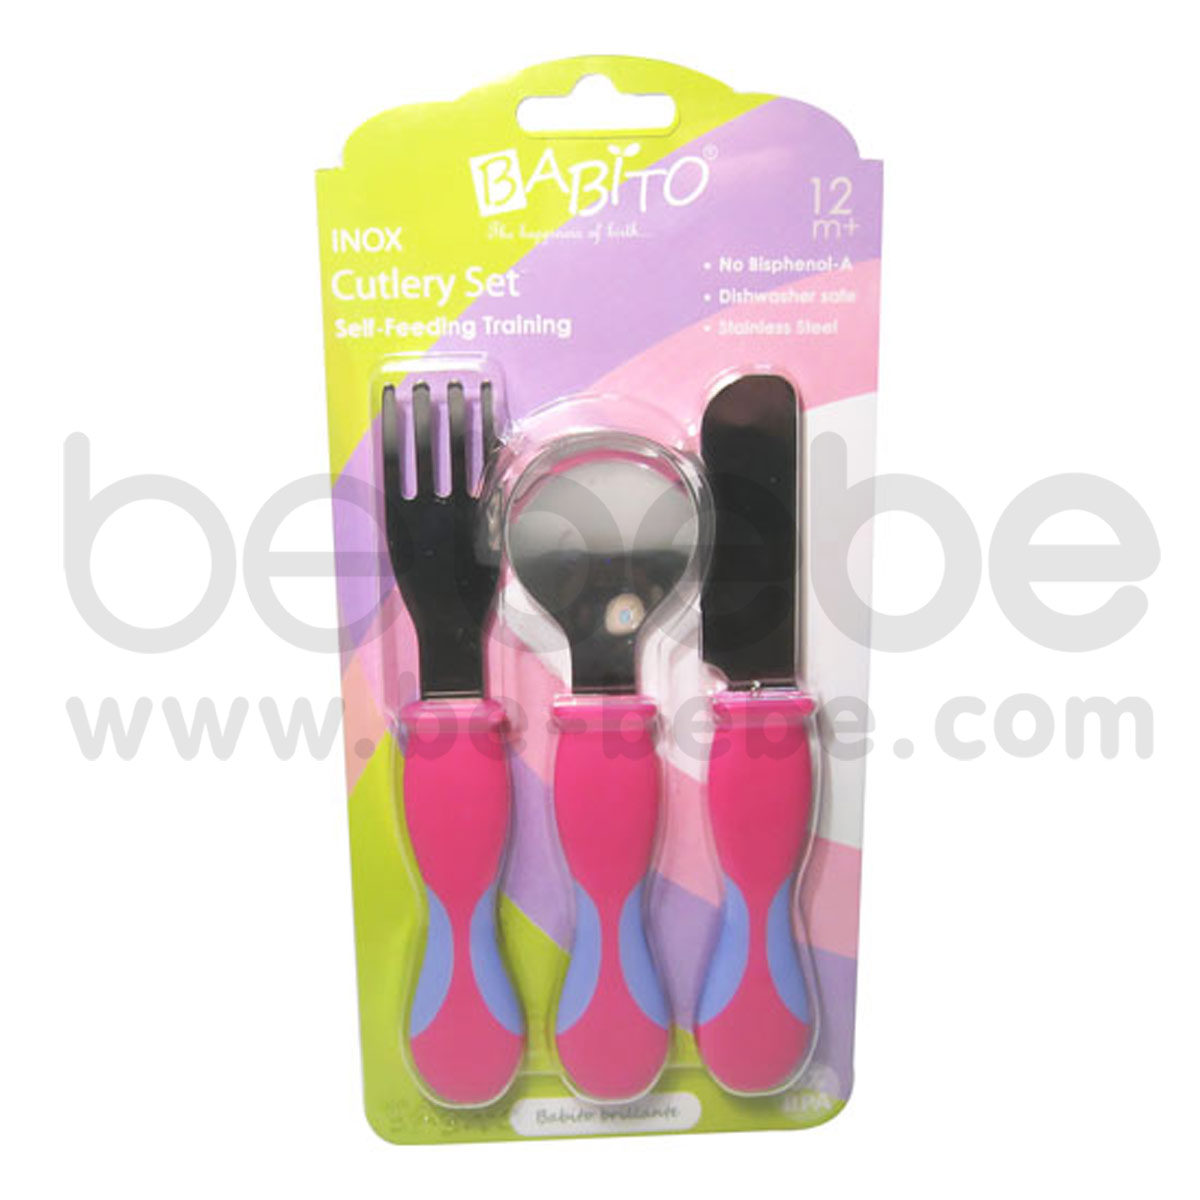 BABITO : INOX Self-Feeding Training Cutlery Set / Pink